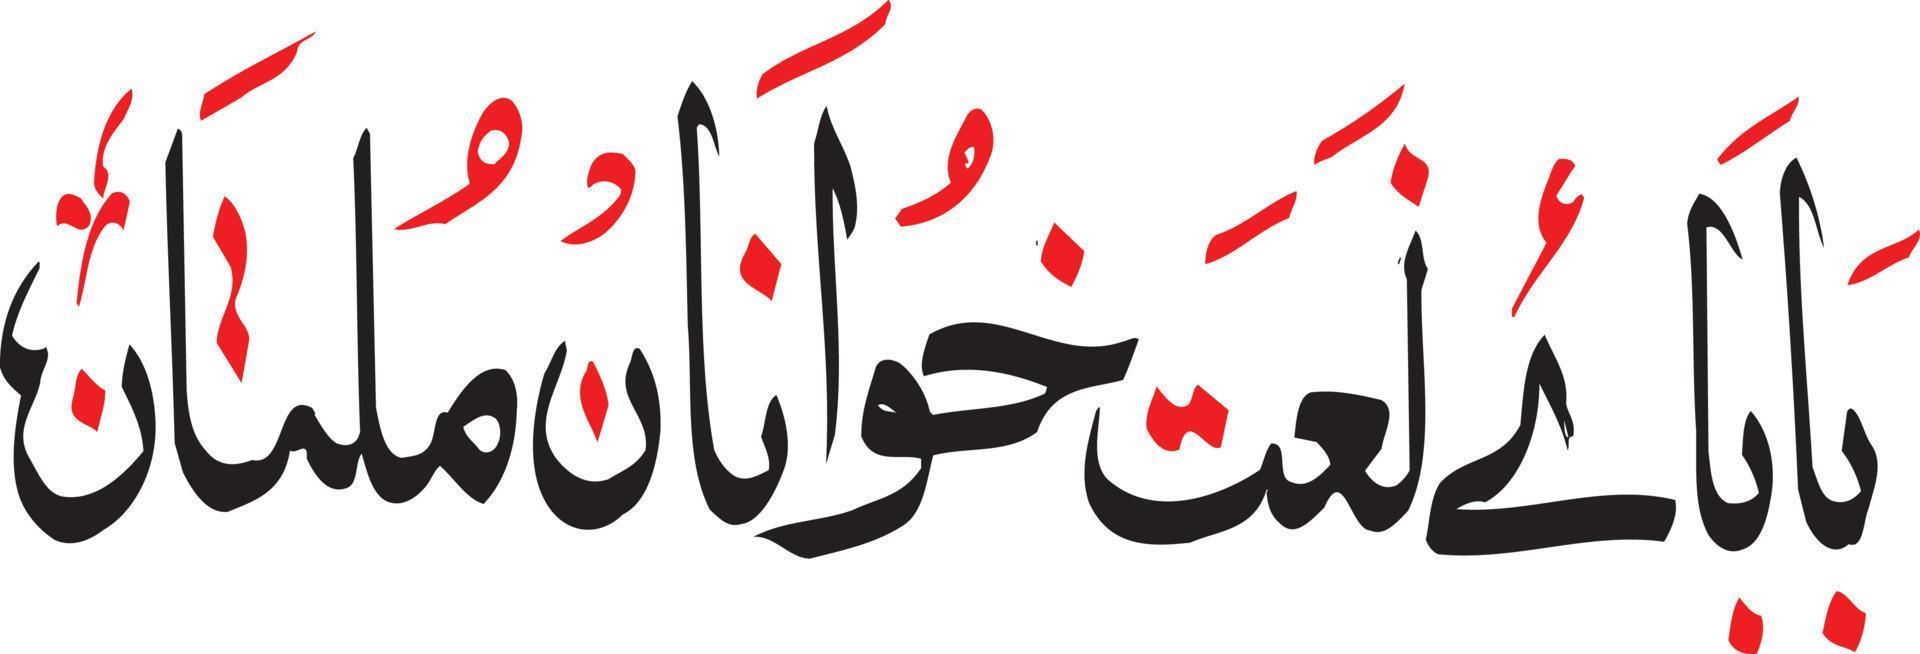 babaey naat khawanan multan caligrafía islámica vector libre